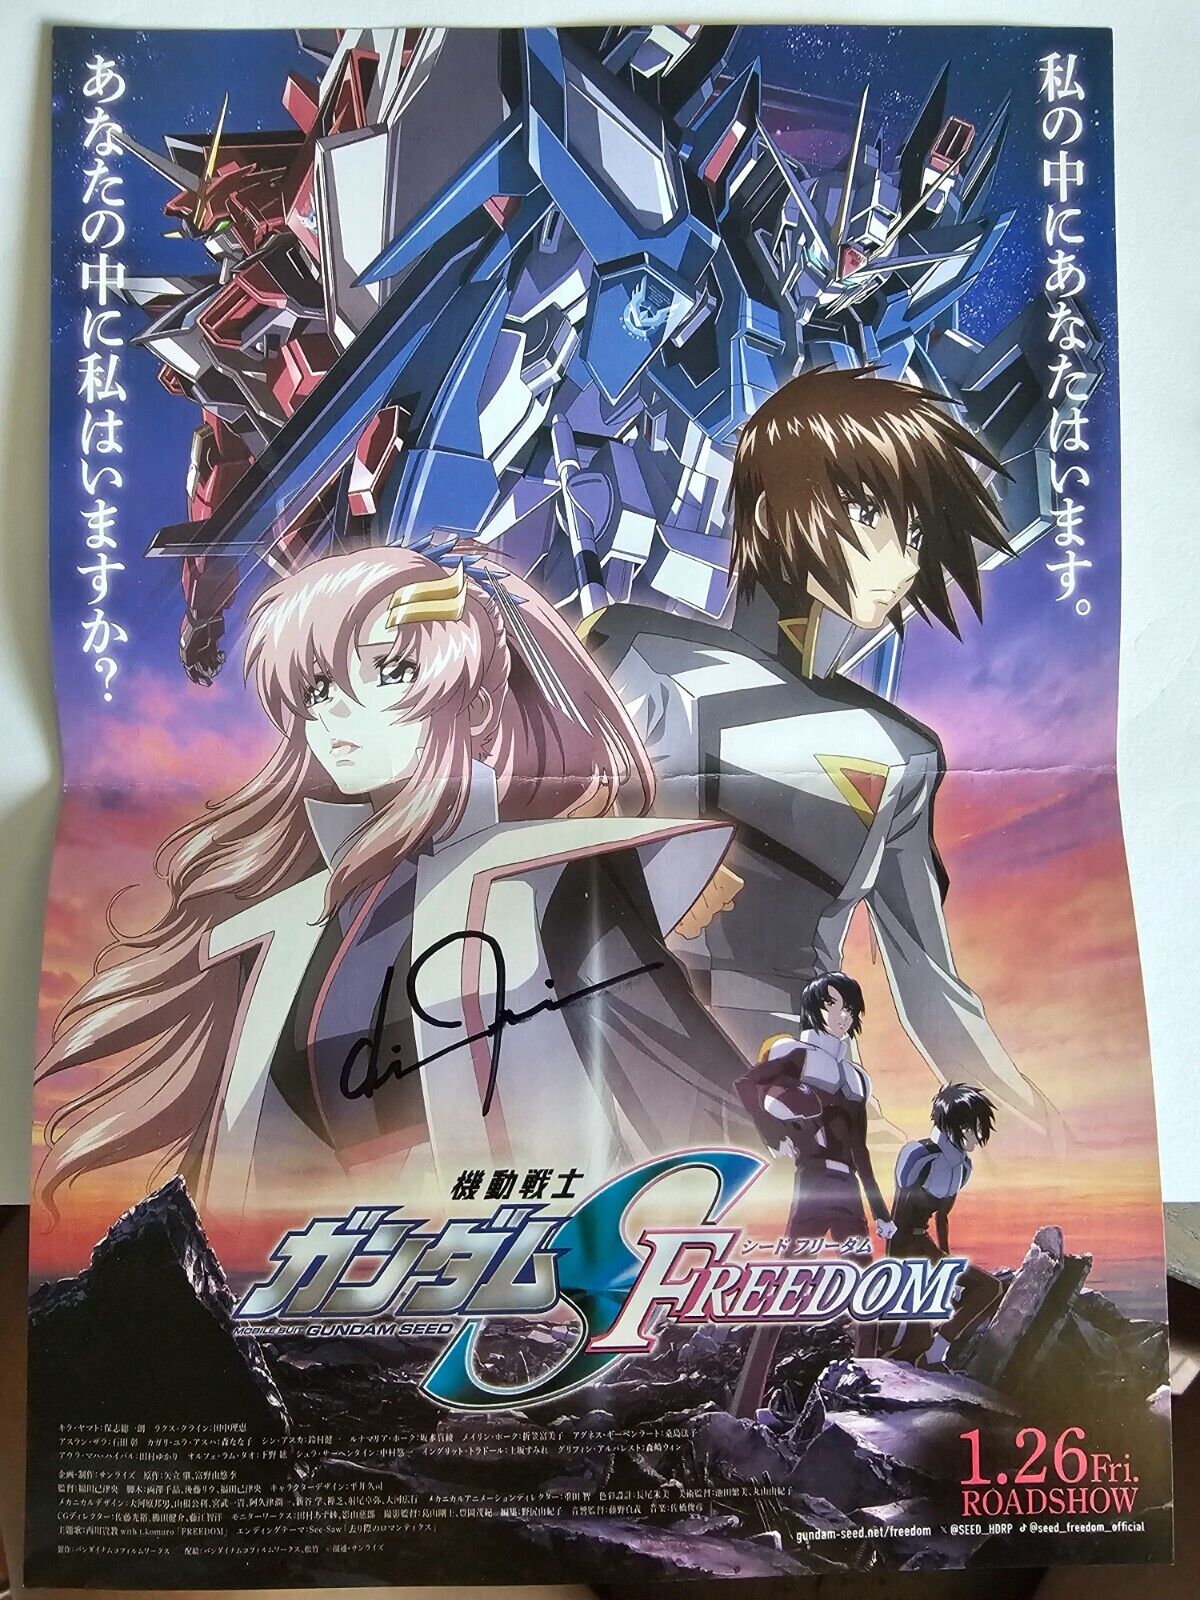 Mobile Suit Gundam Seed S Freedom Akira Ishida Autograph Signature